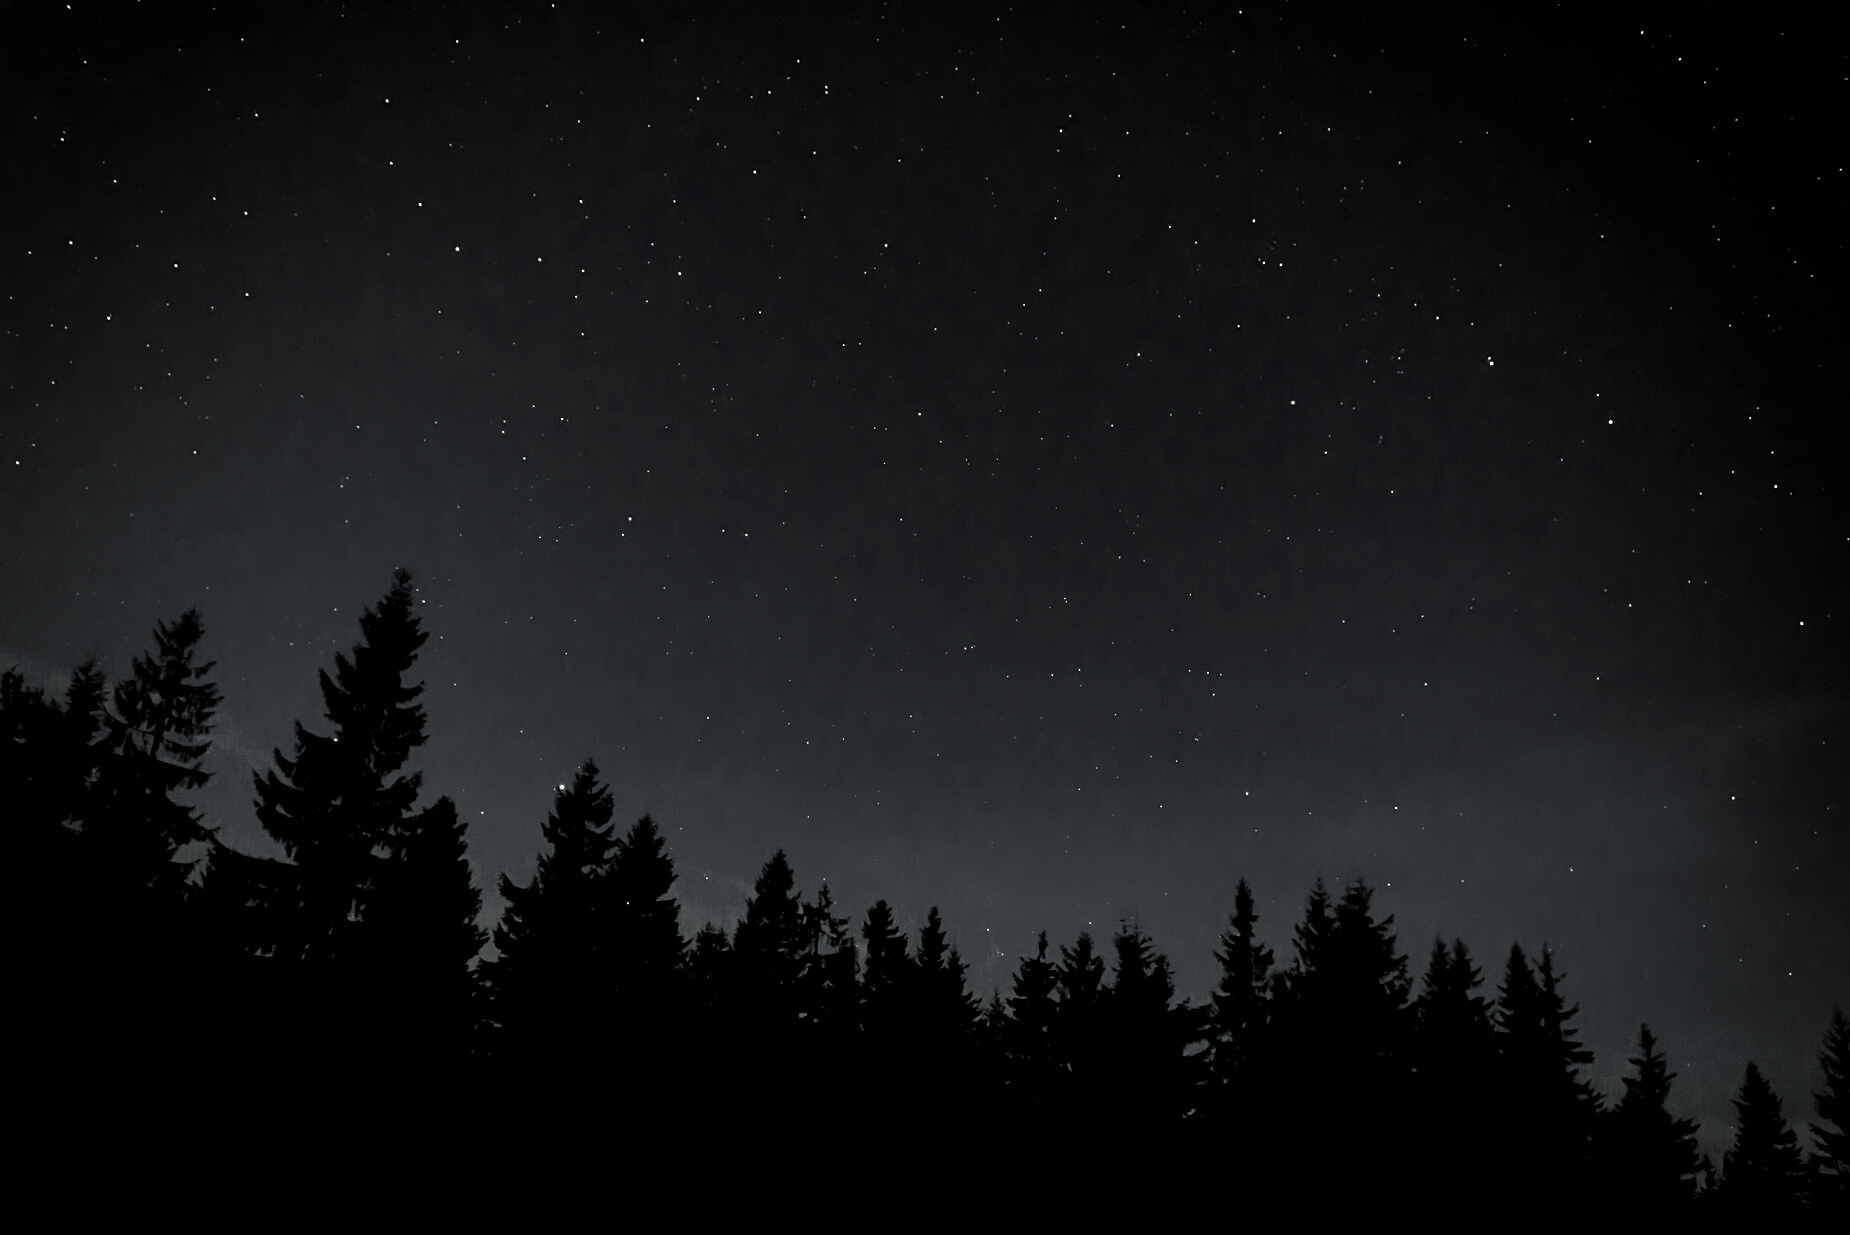 Night Sky with Silhouette of Pine Trees